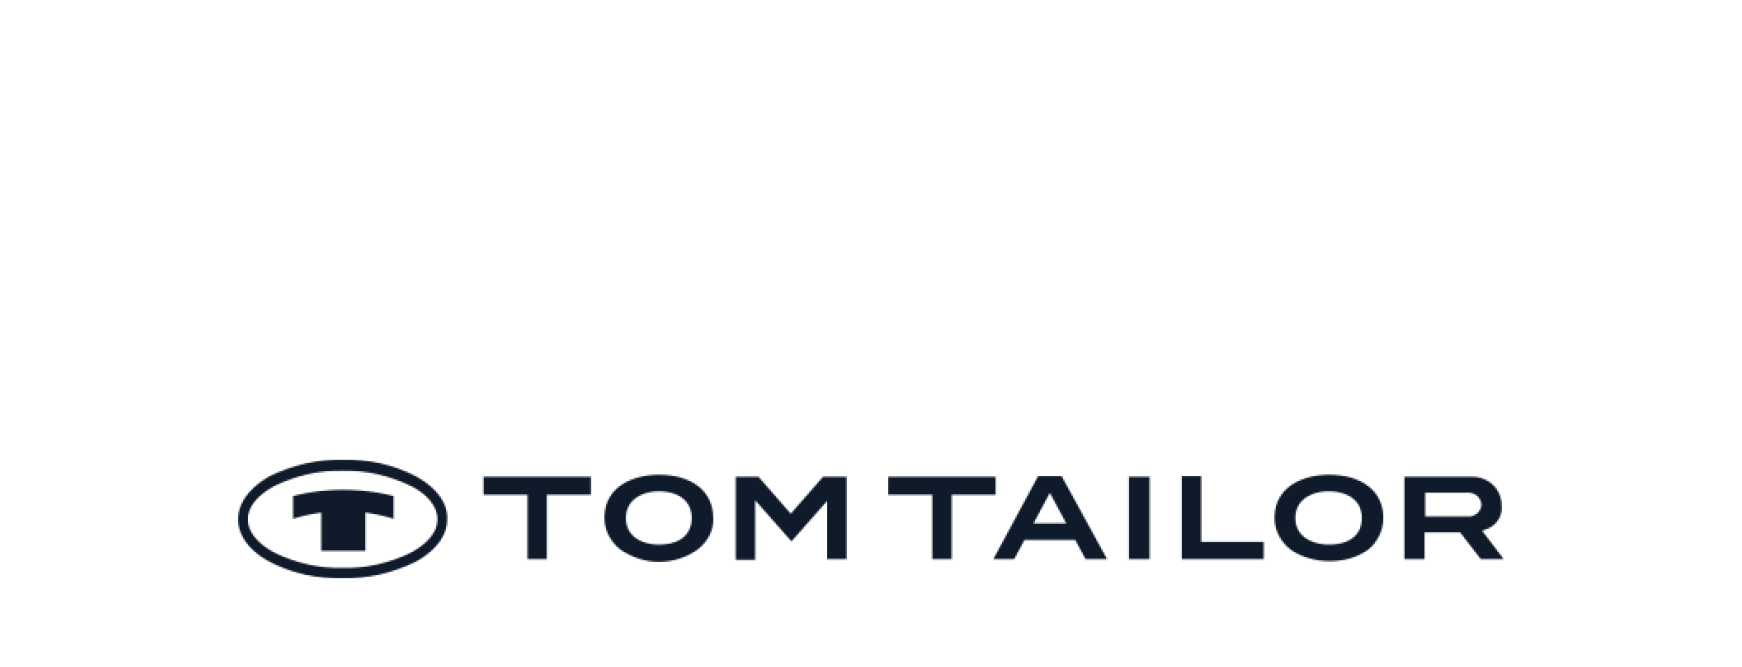 Tom Tailor логотип. Том Тейлор знак. Логотип том Тейлор вектор. Tom Tailor история бренда. 3 тома тейлора